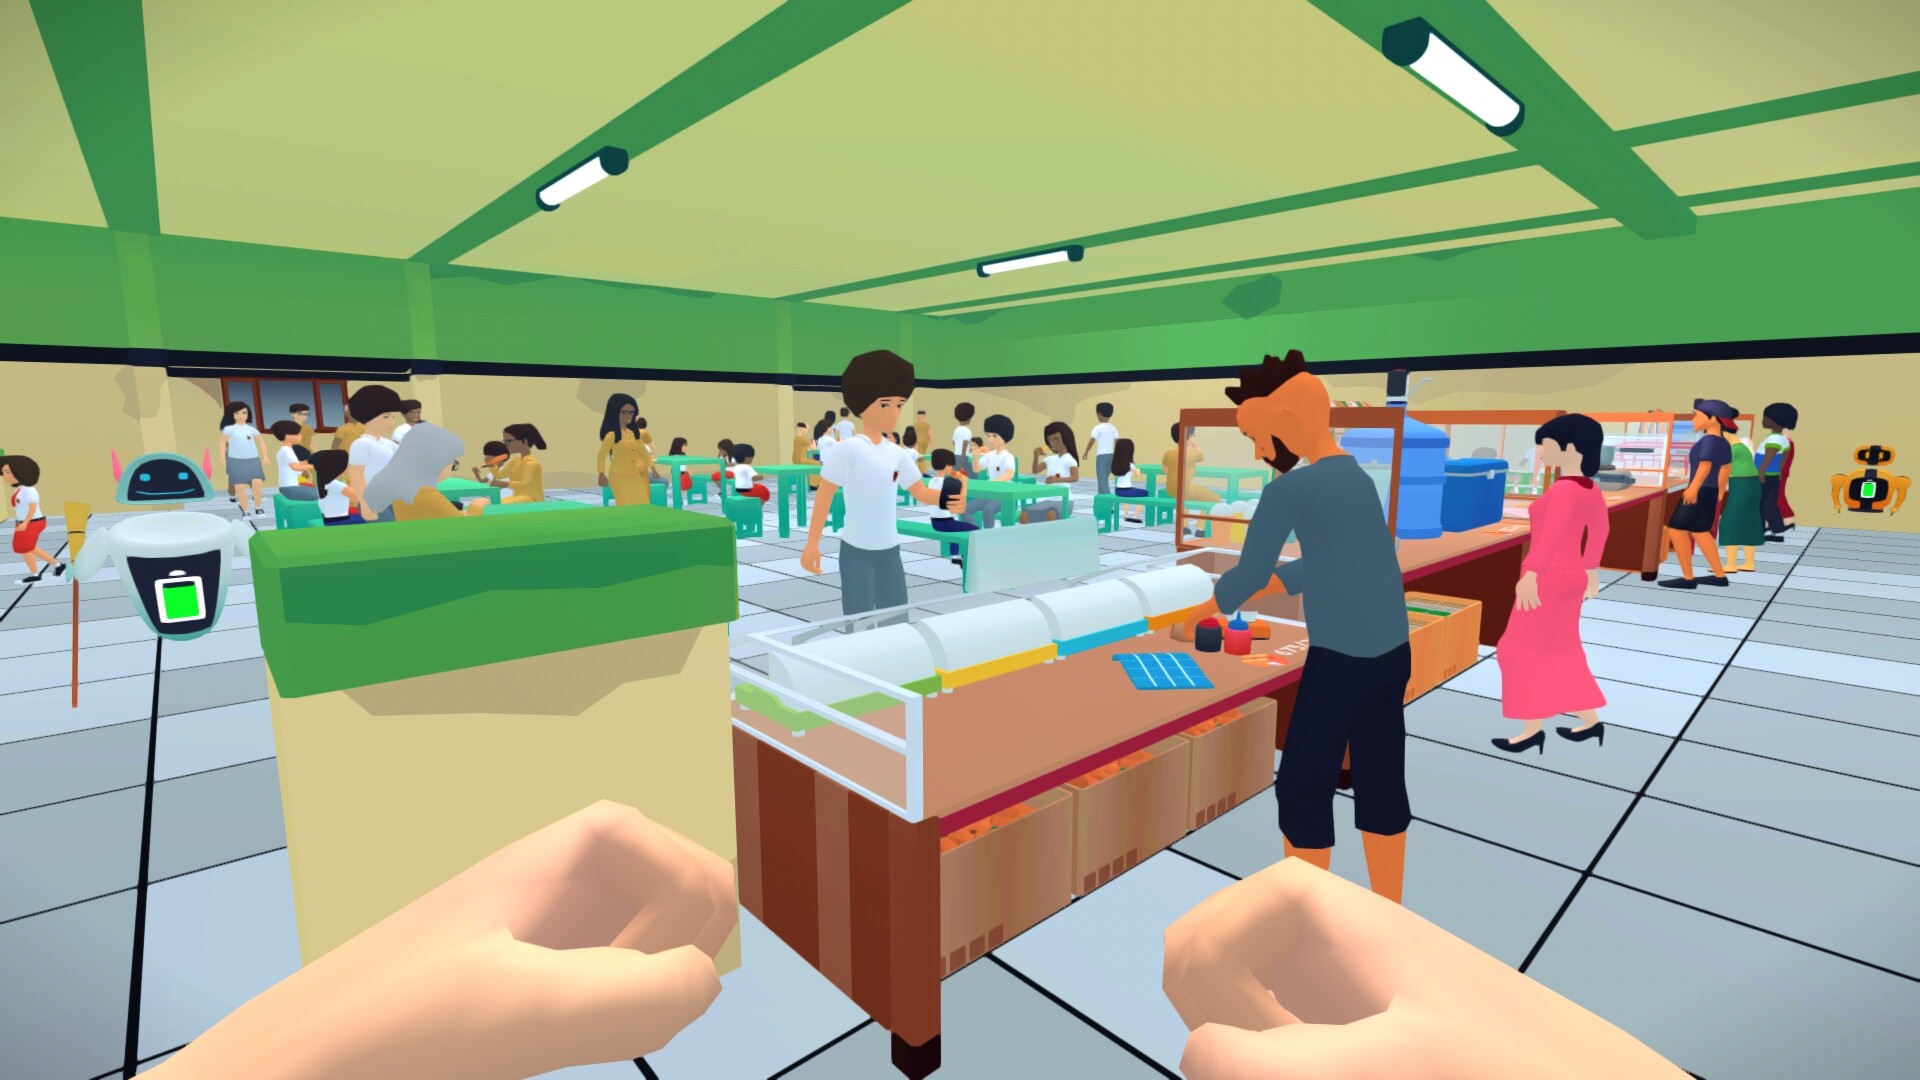 School Cafeteria Simulator Steam CD Key, $2.81